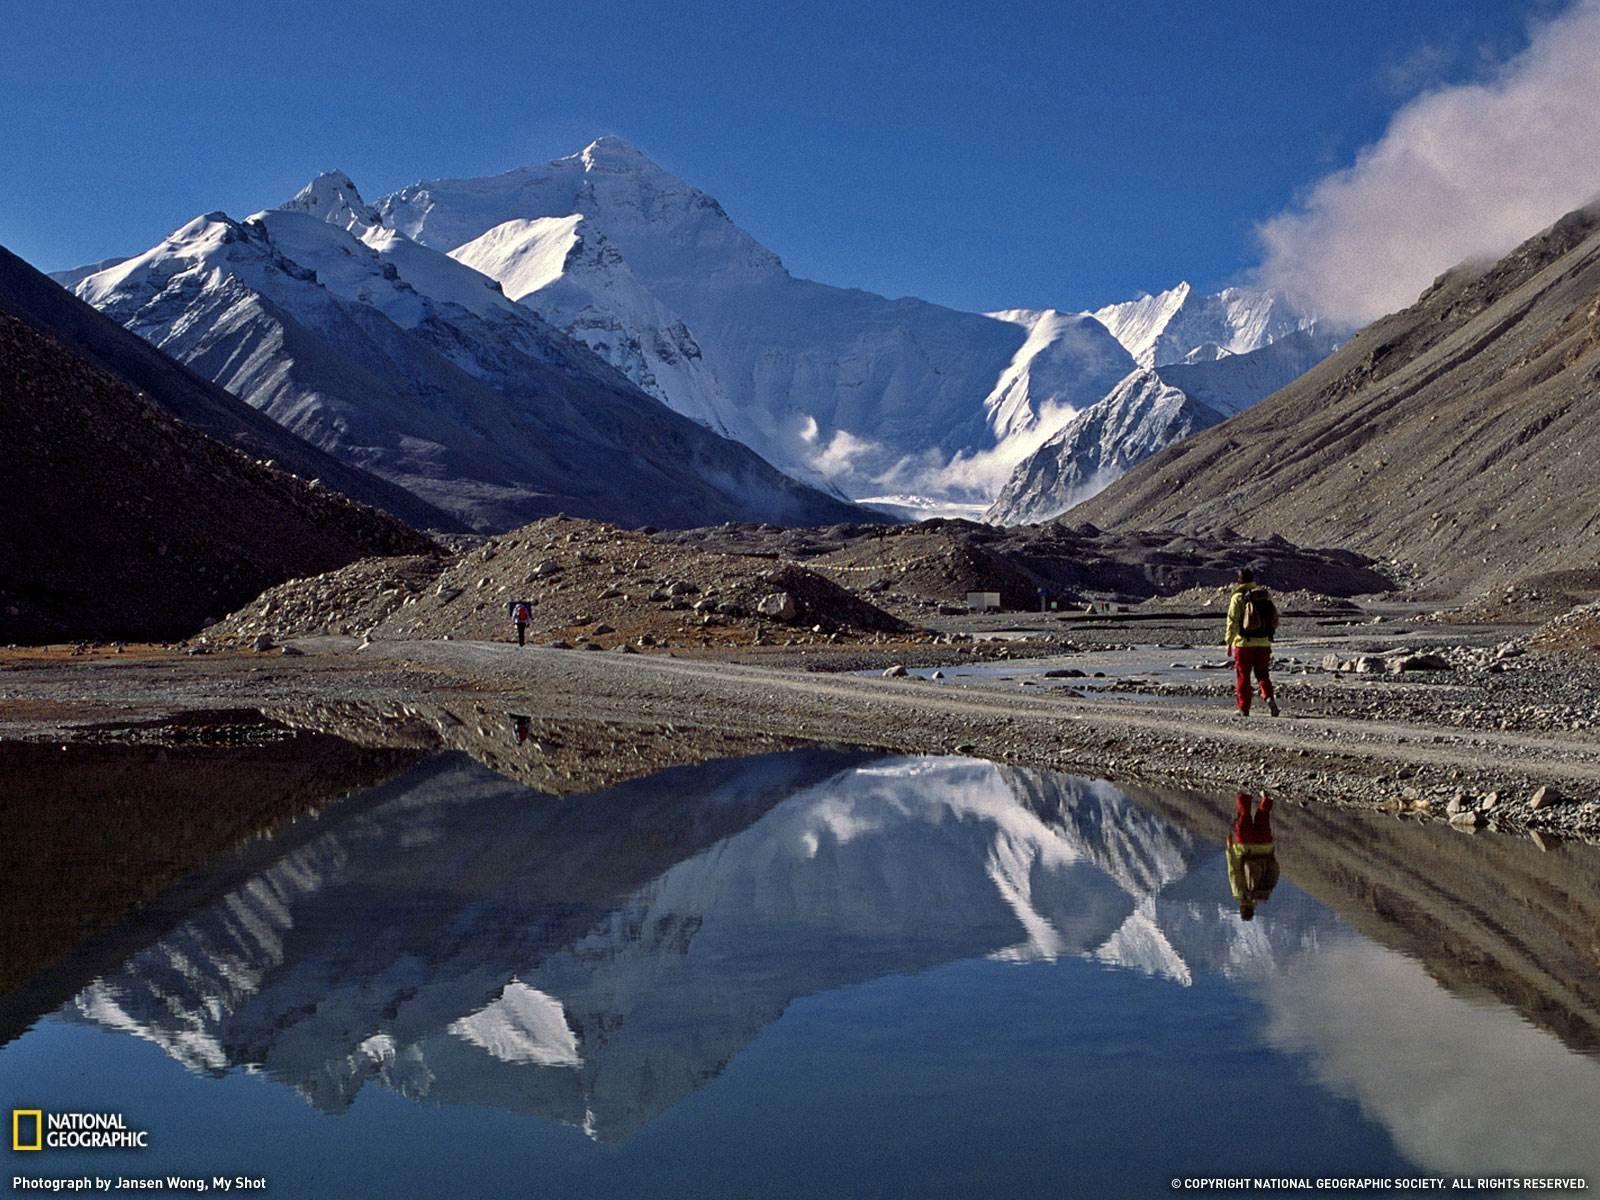 Tibet Landscape Wallpapers Top Free Tibet Landscape Backgrounds